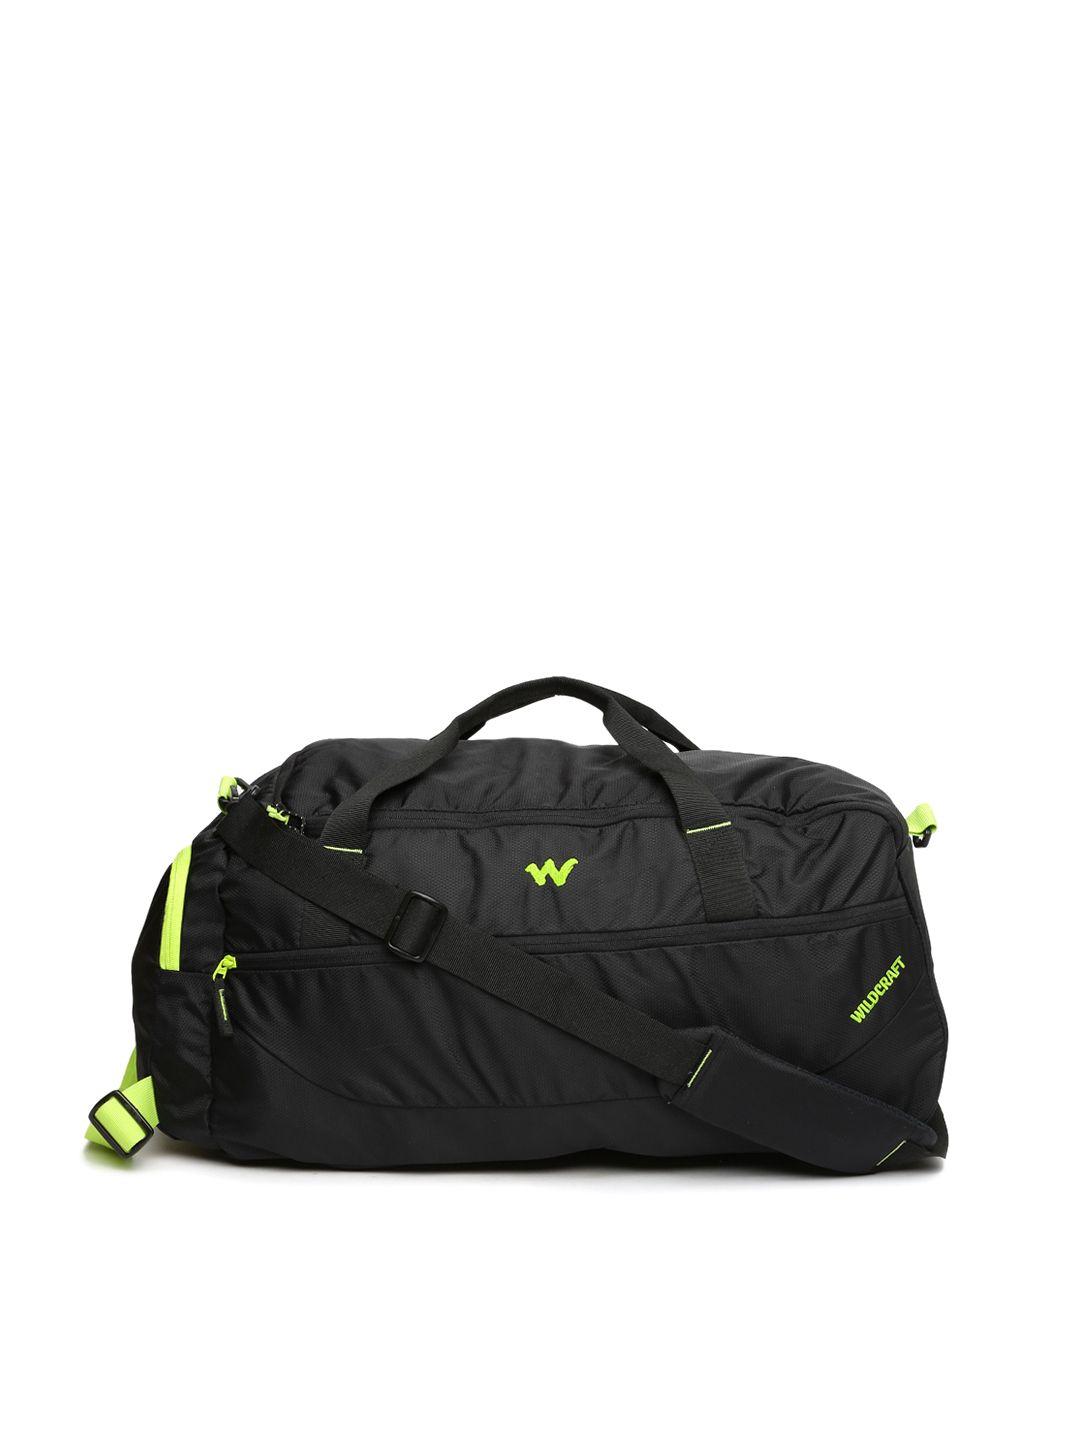 wildcraft unisex black rover 2 duffel bag with skate wheels